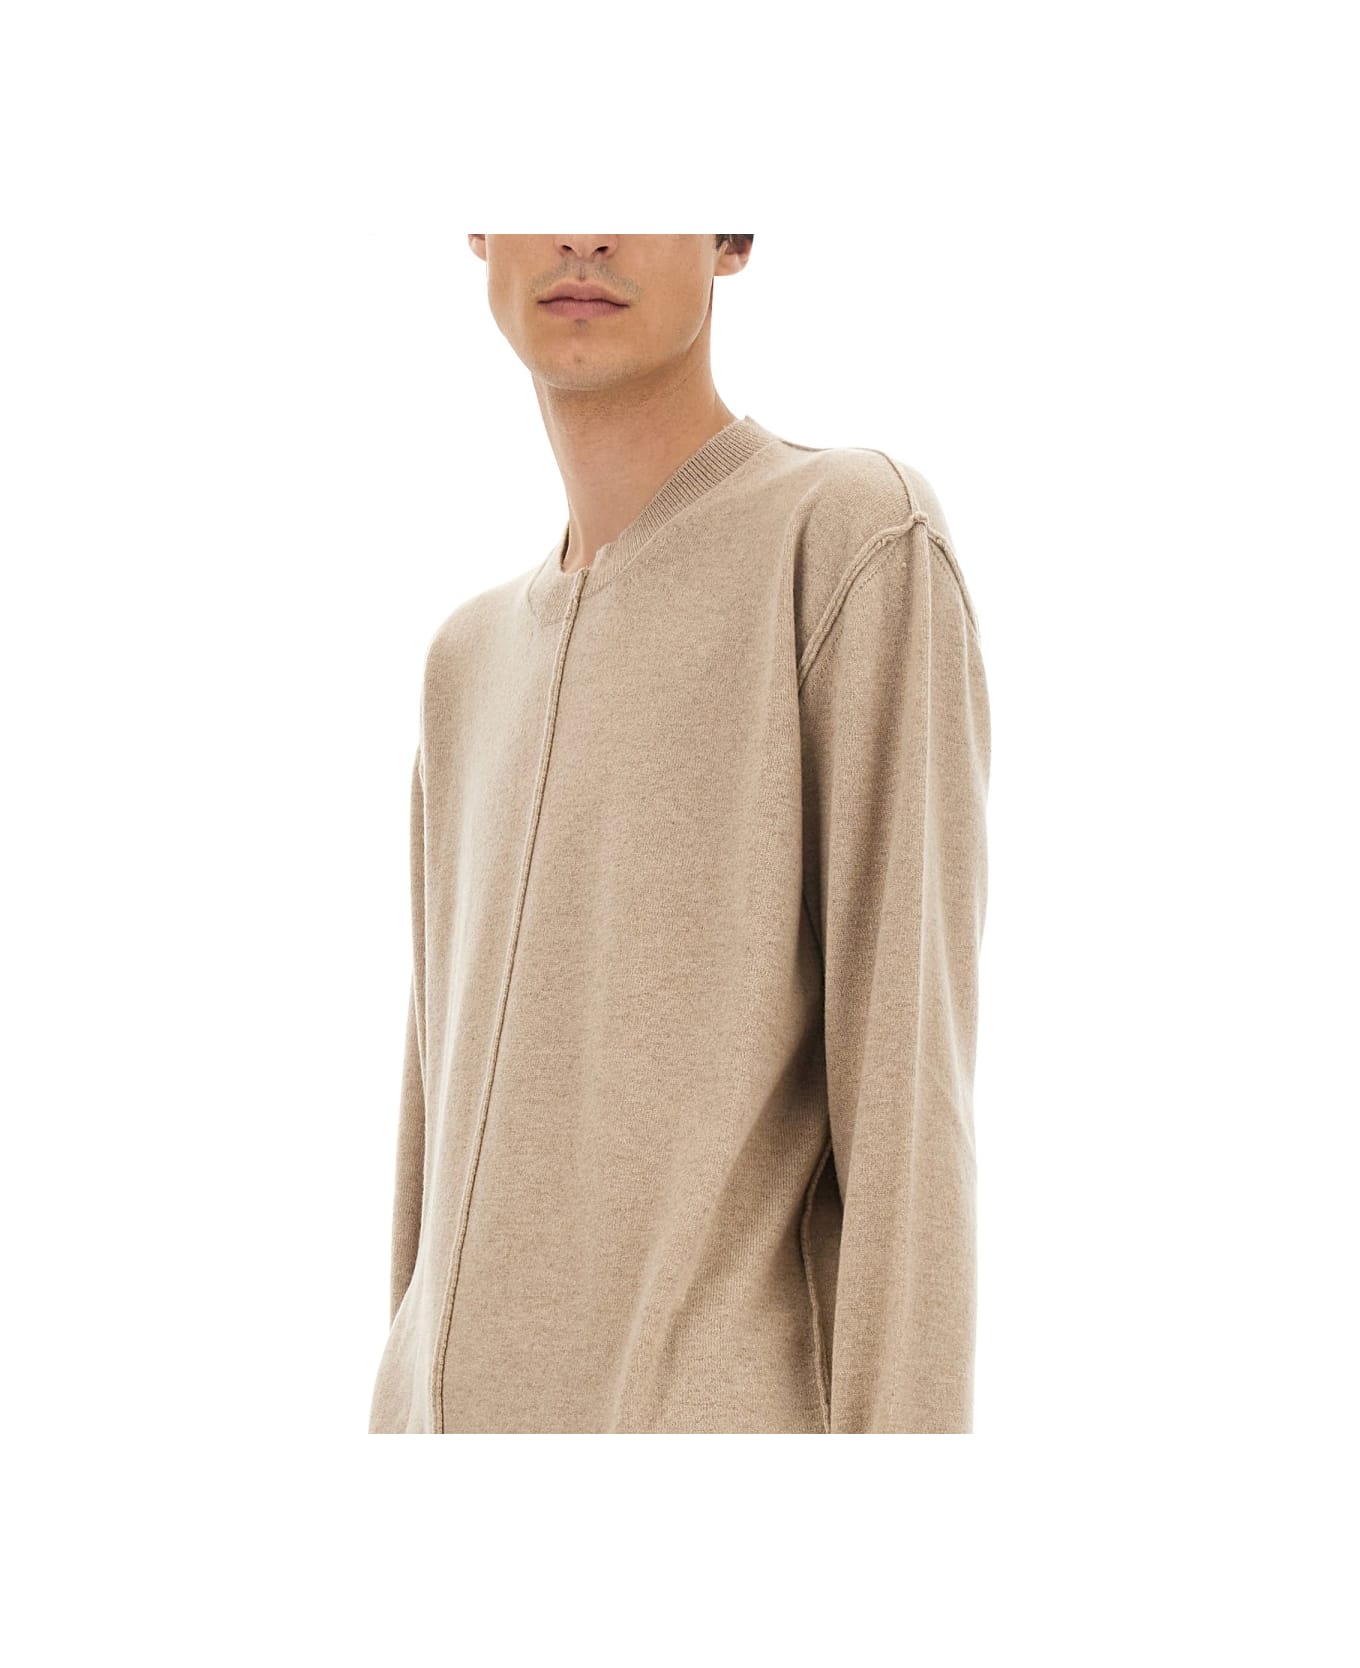 Uma Wang Cashmere Sweater - BEIGE